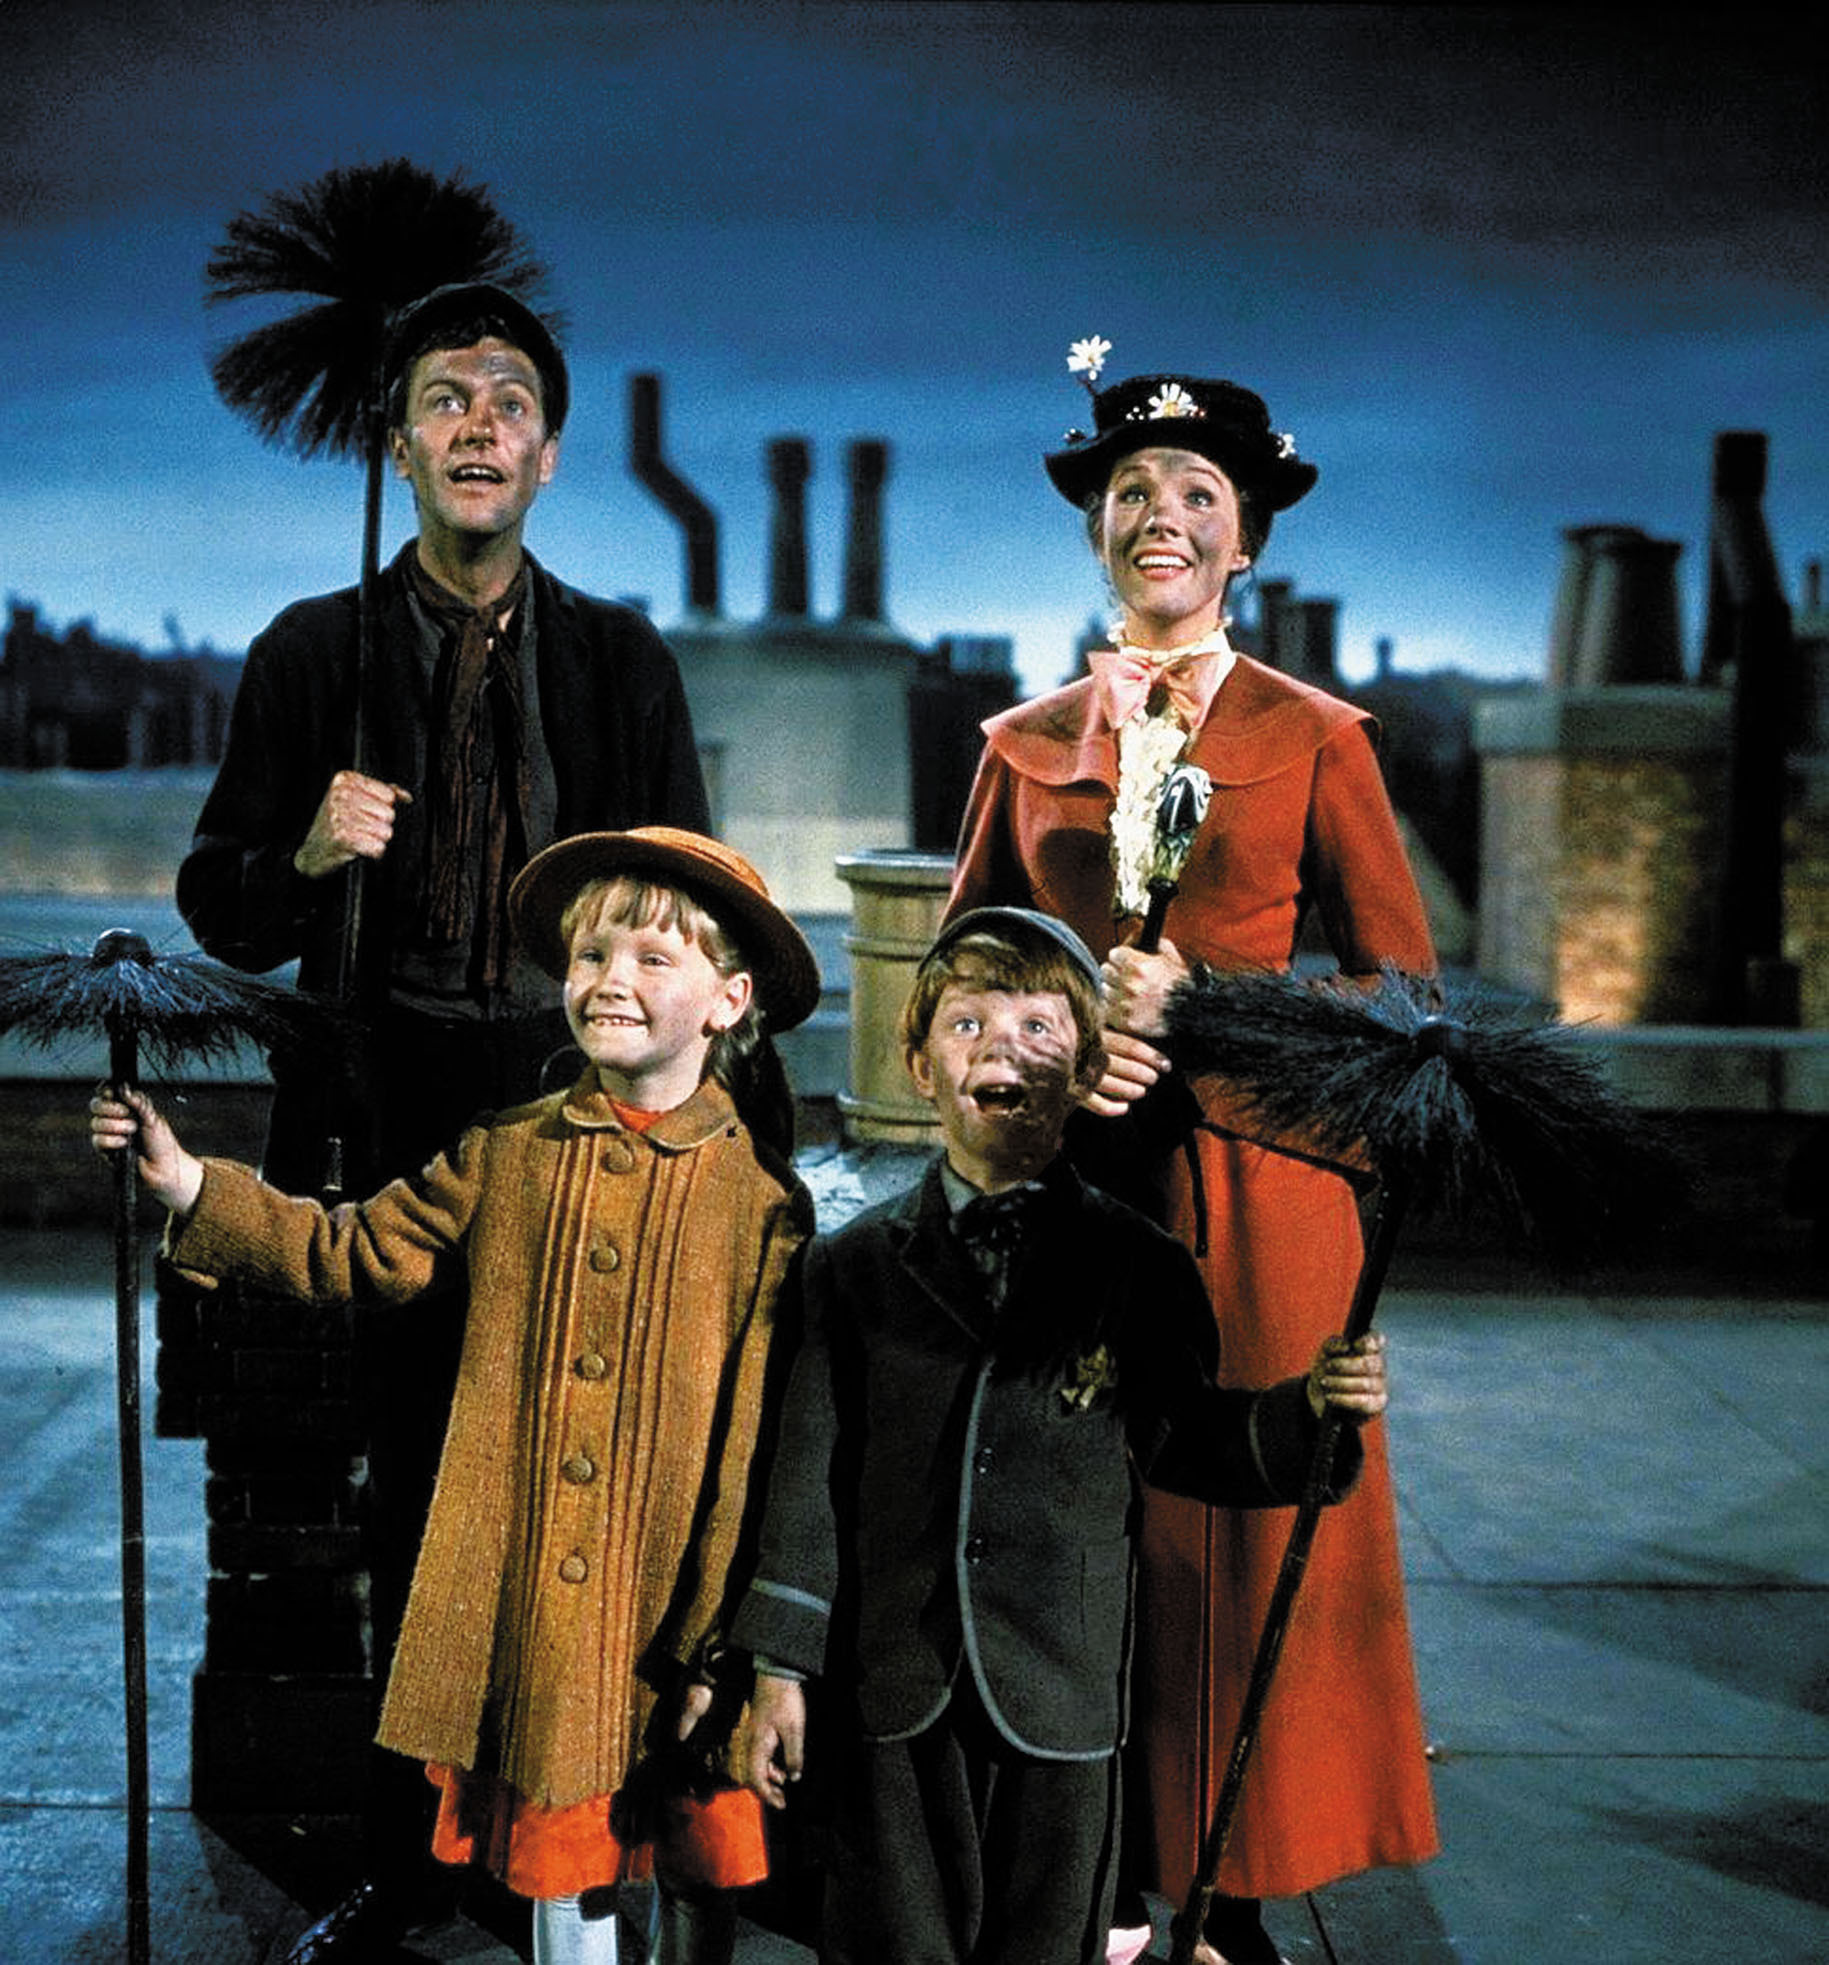 Still of Julie Andrews, Dick Van Dyke, Karen Dotrice and Matthew Garber in Mary Poppins (1964)